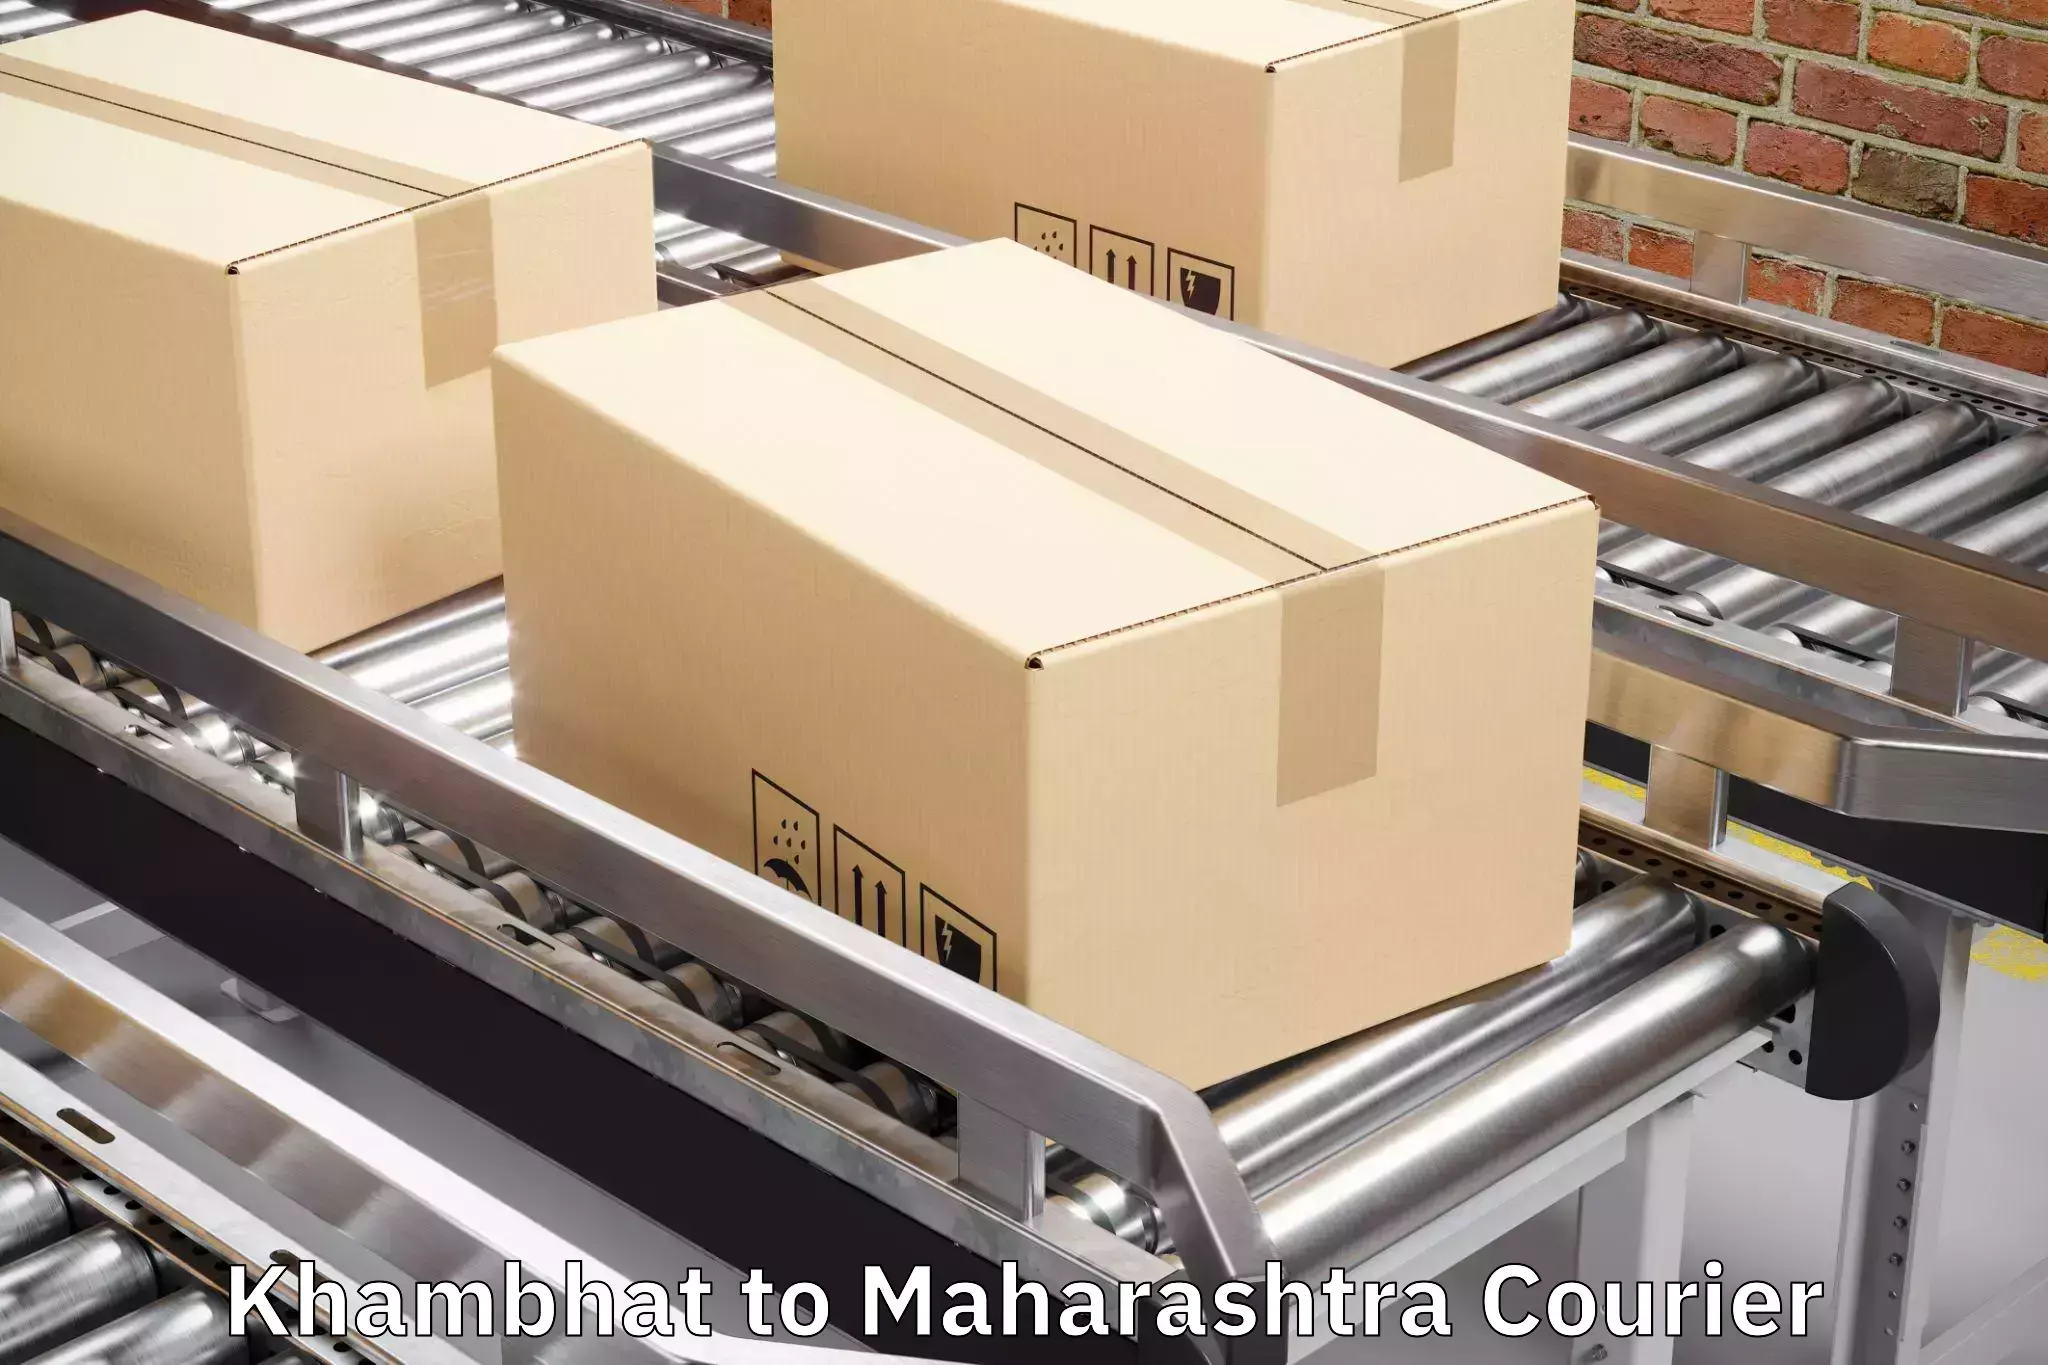 Hassle-free luggage shipping in Khambhat to Chandrapur